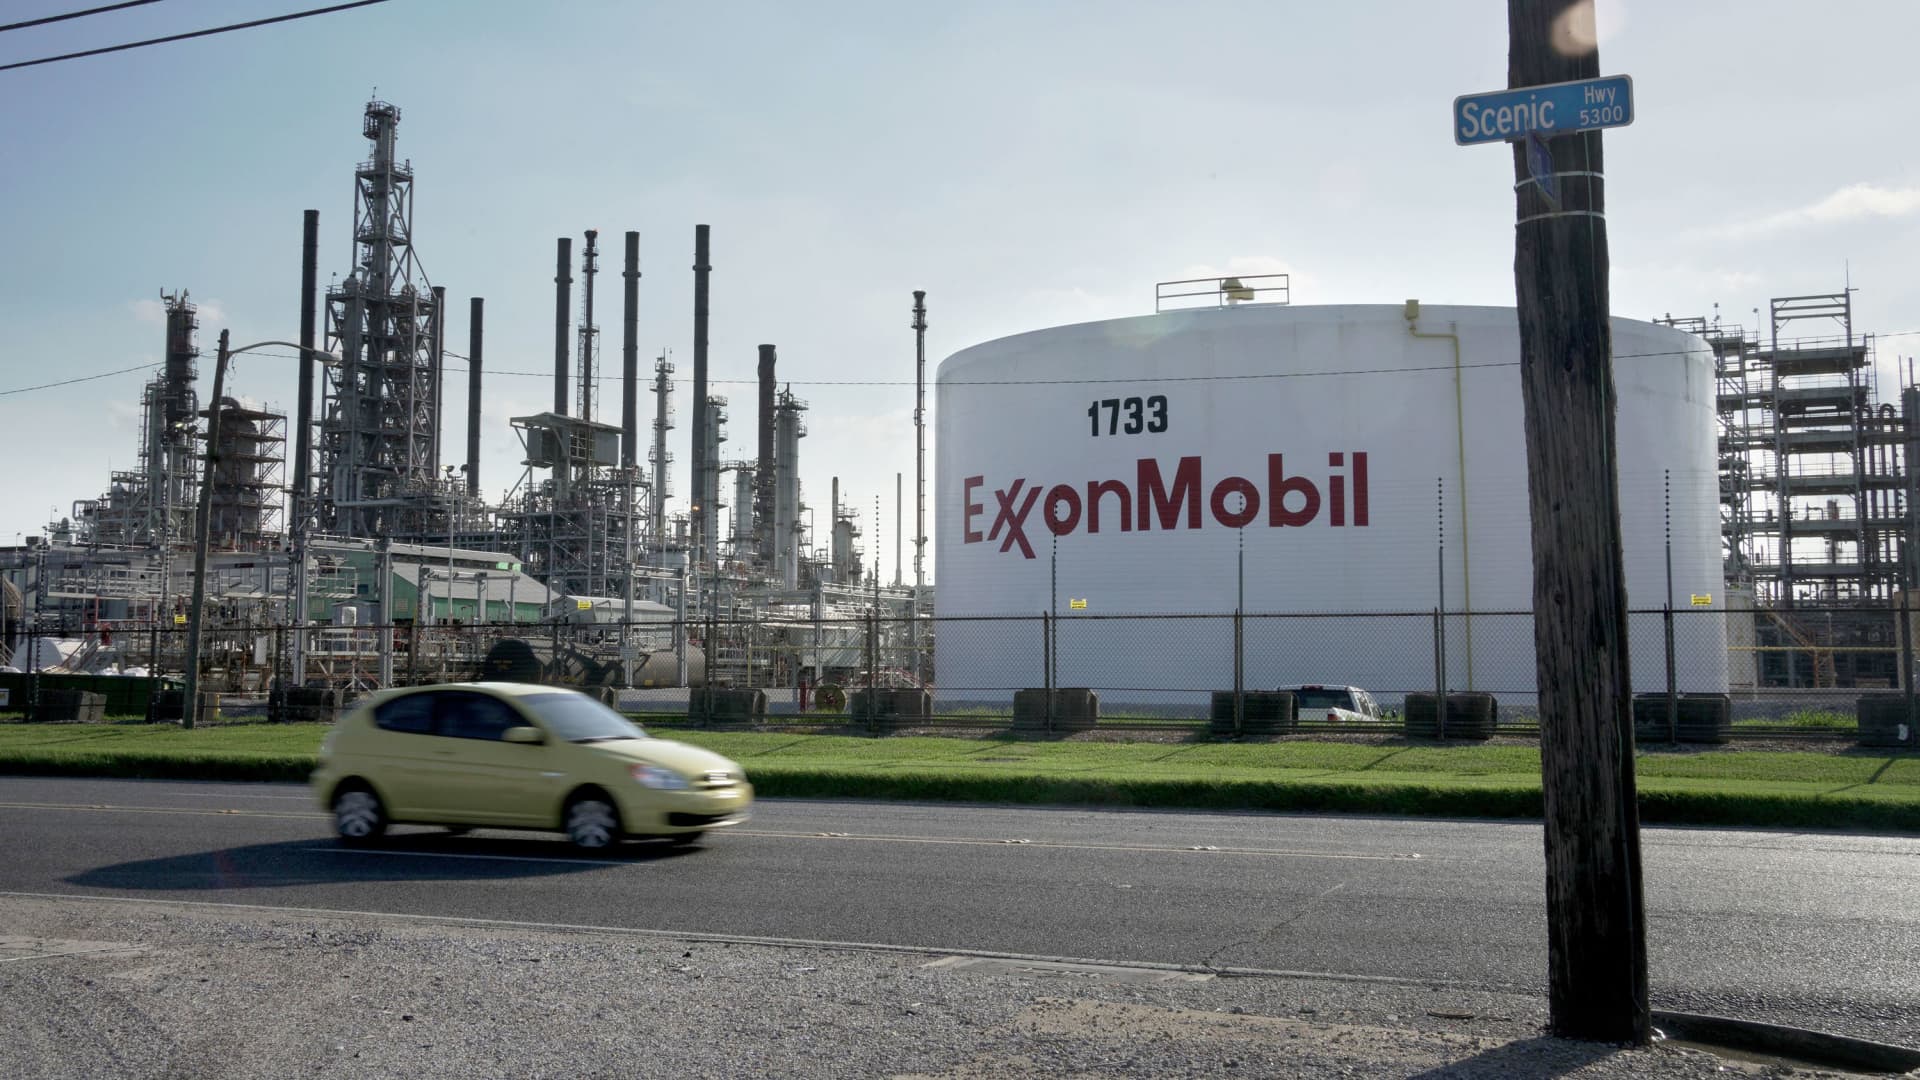 Exxon Mobil has been lobbying against parts of Biden reconciliation bill